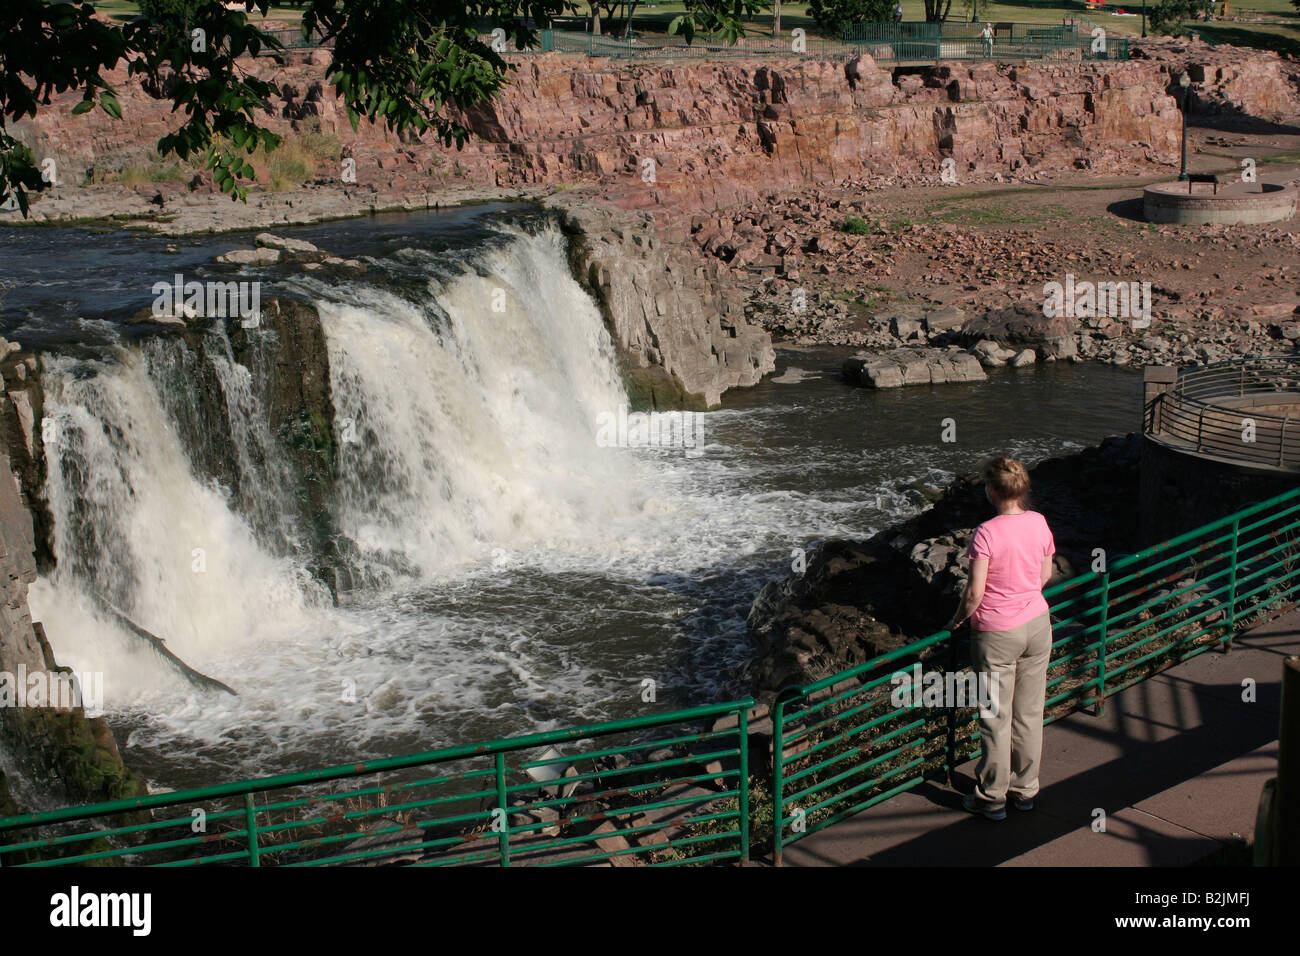 Fällt die Bildfläche Falls Park in Sioux Falls, South Dakota. Der rosa Rock ist Quarzit aus Sioux-Quarzit-Formation. Stockfoto